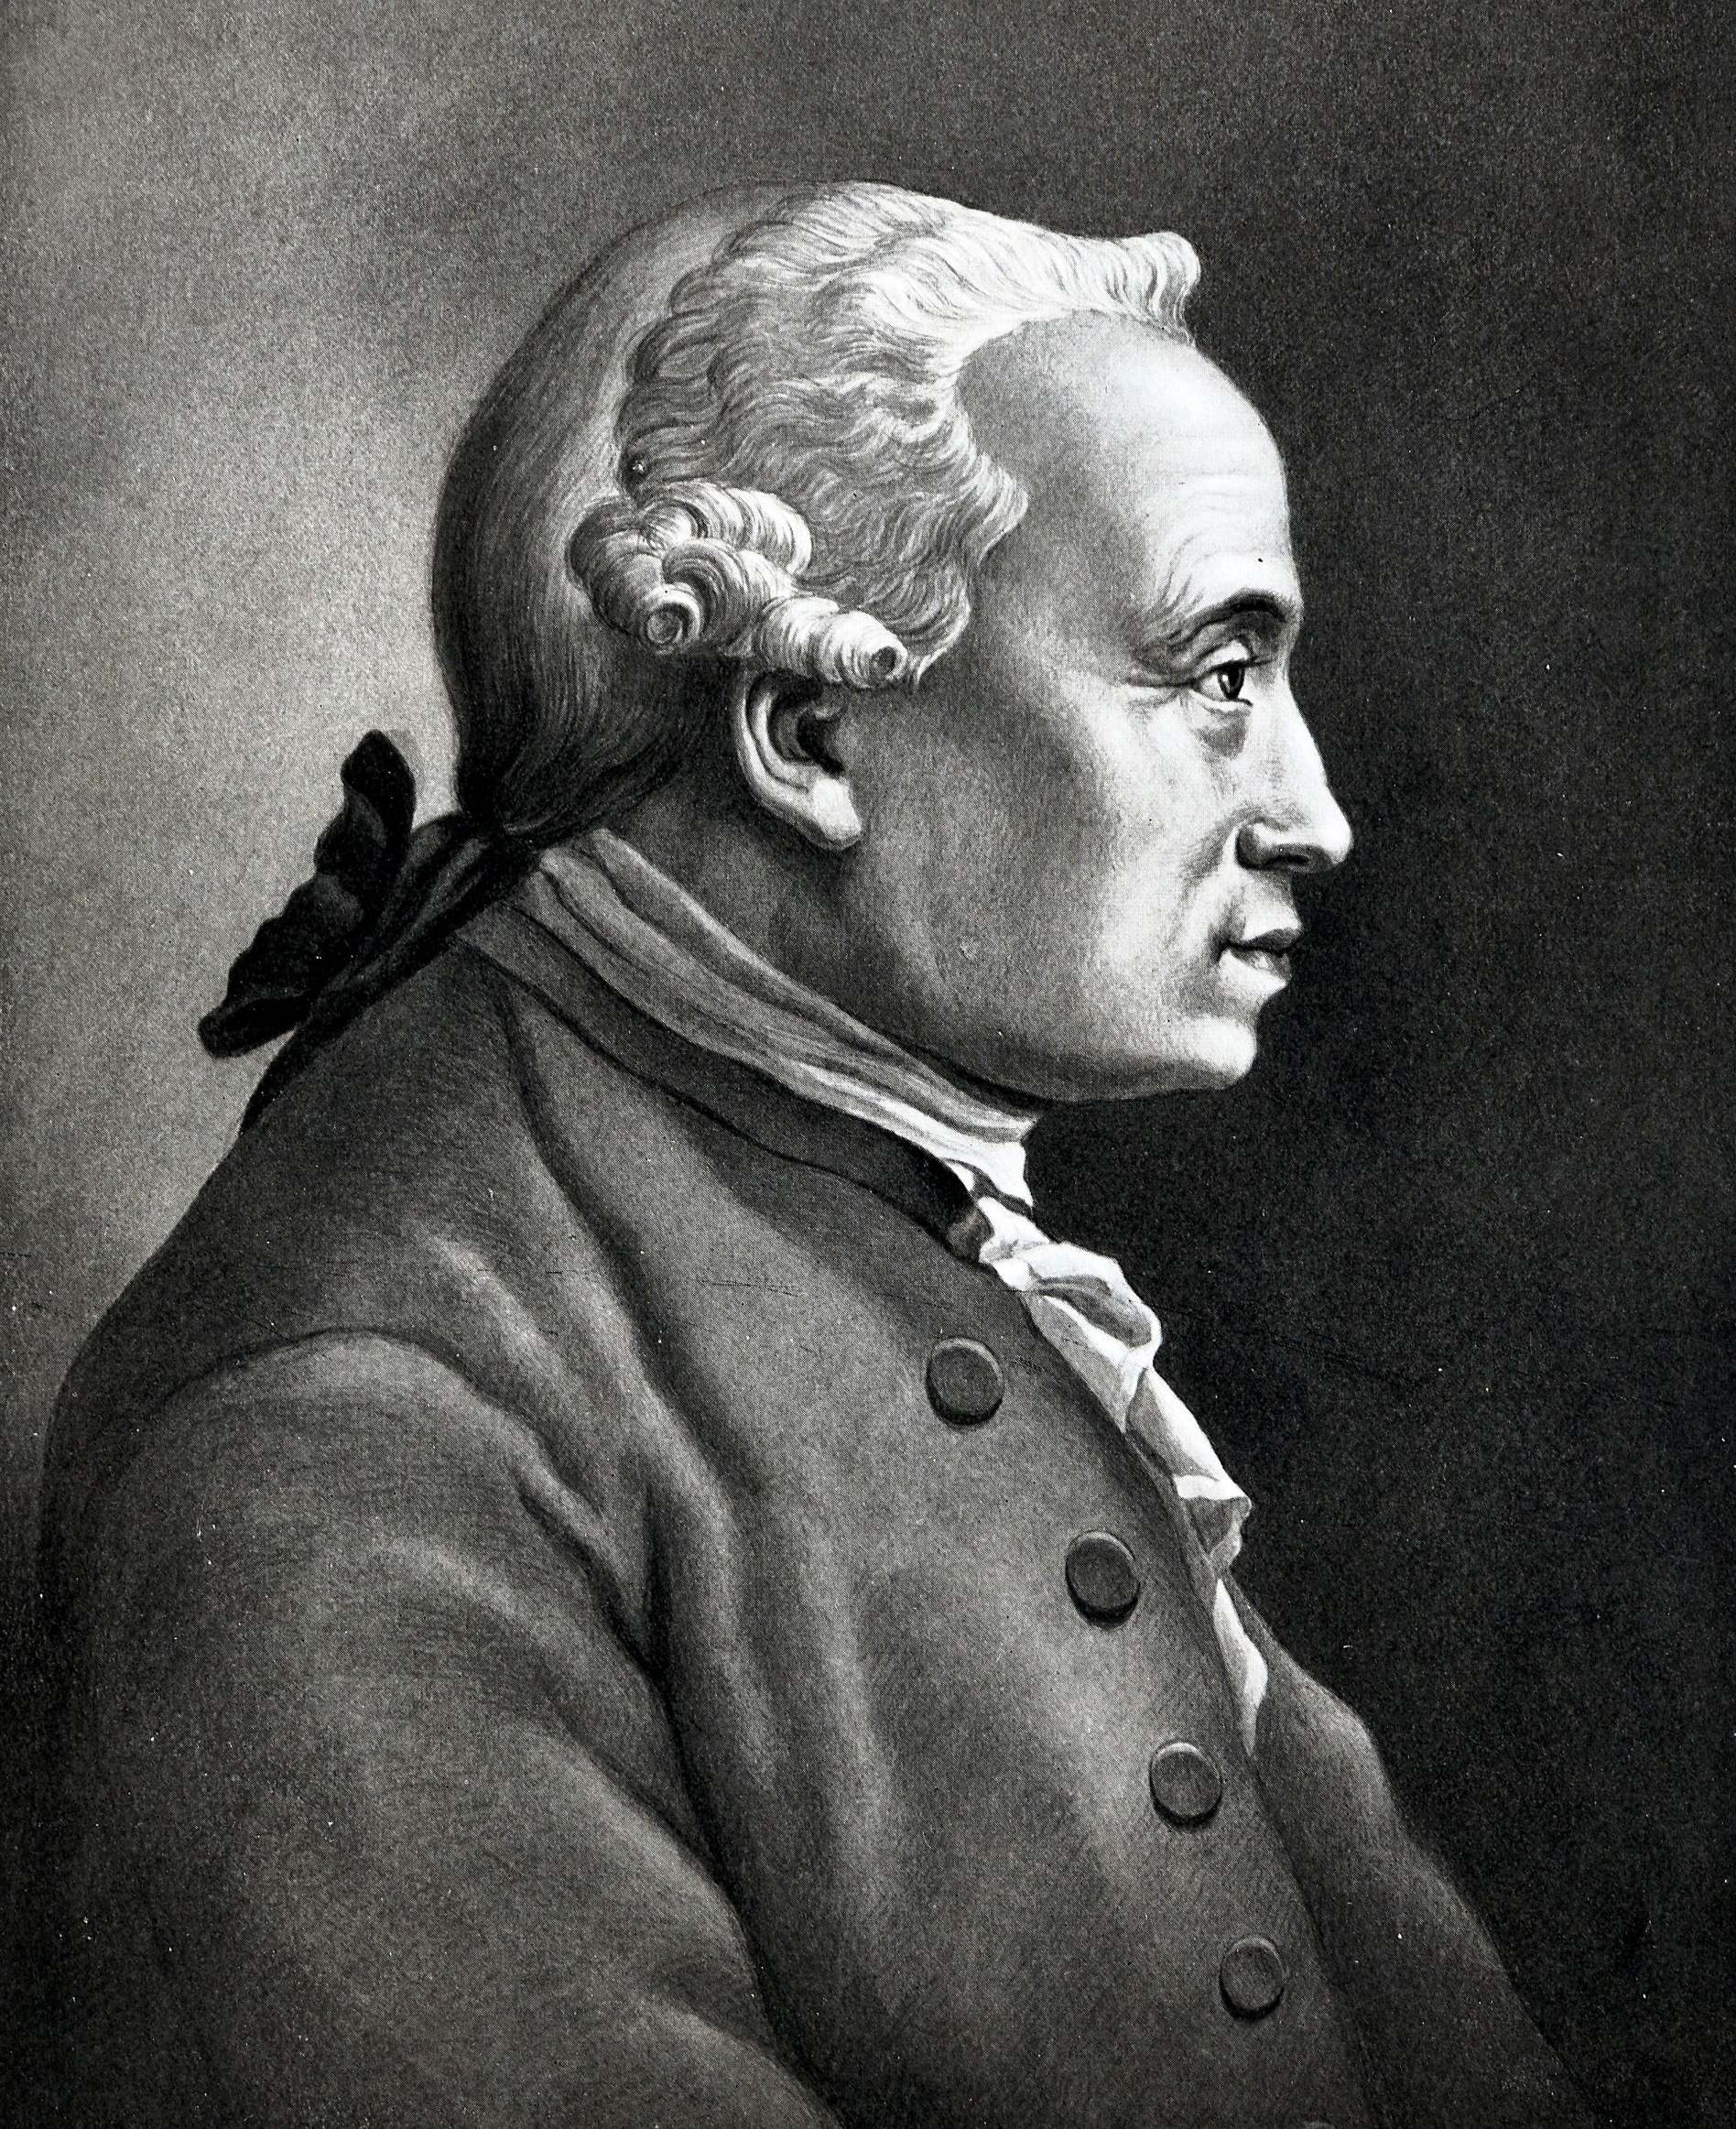 Immanuel Kant debated the ethics of teleology